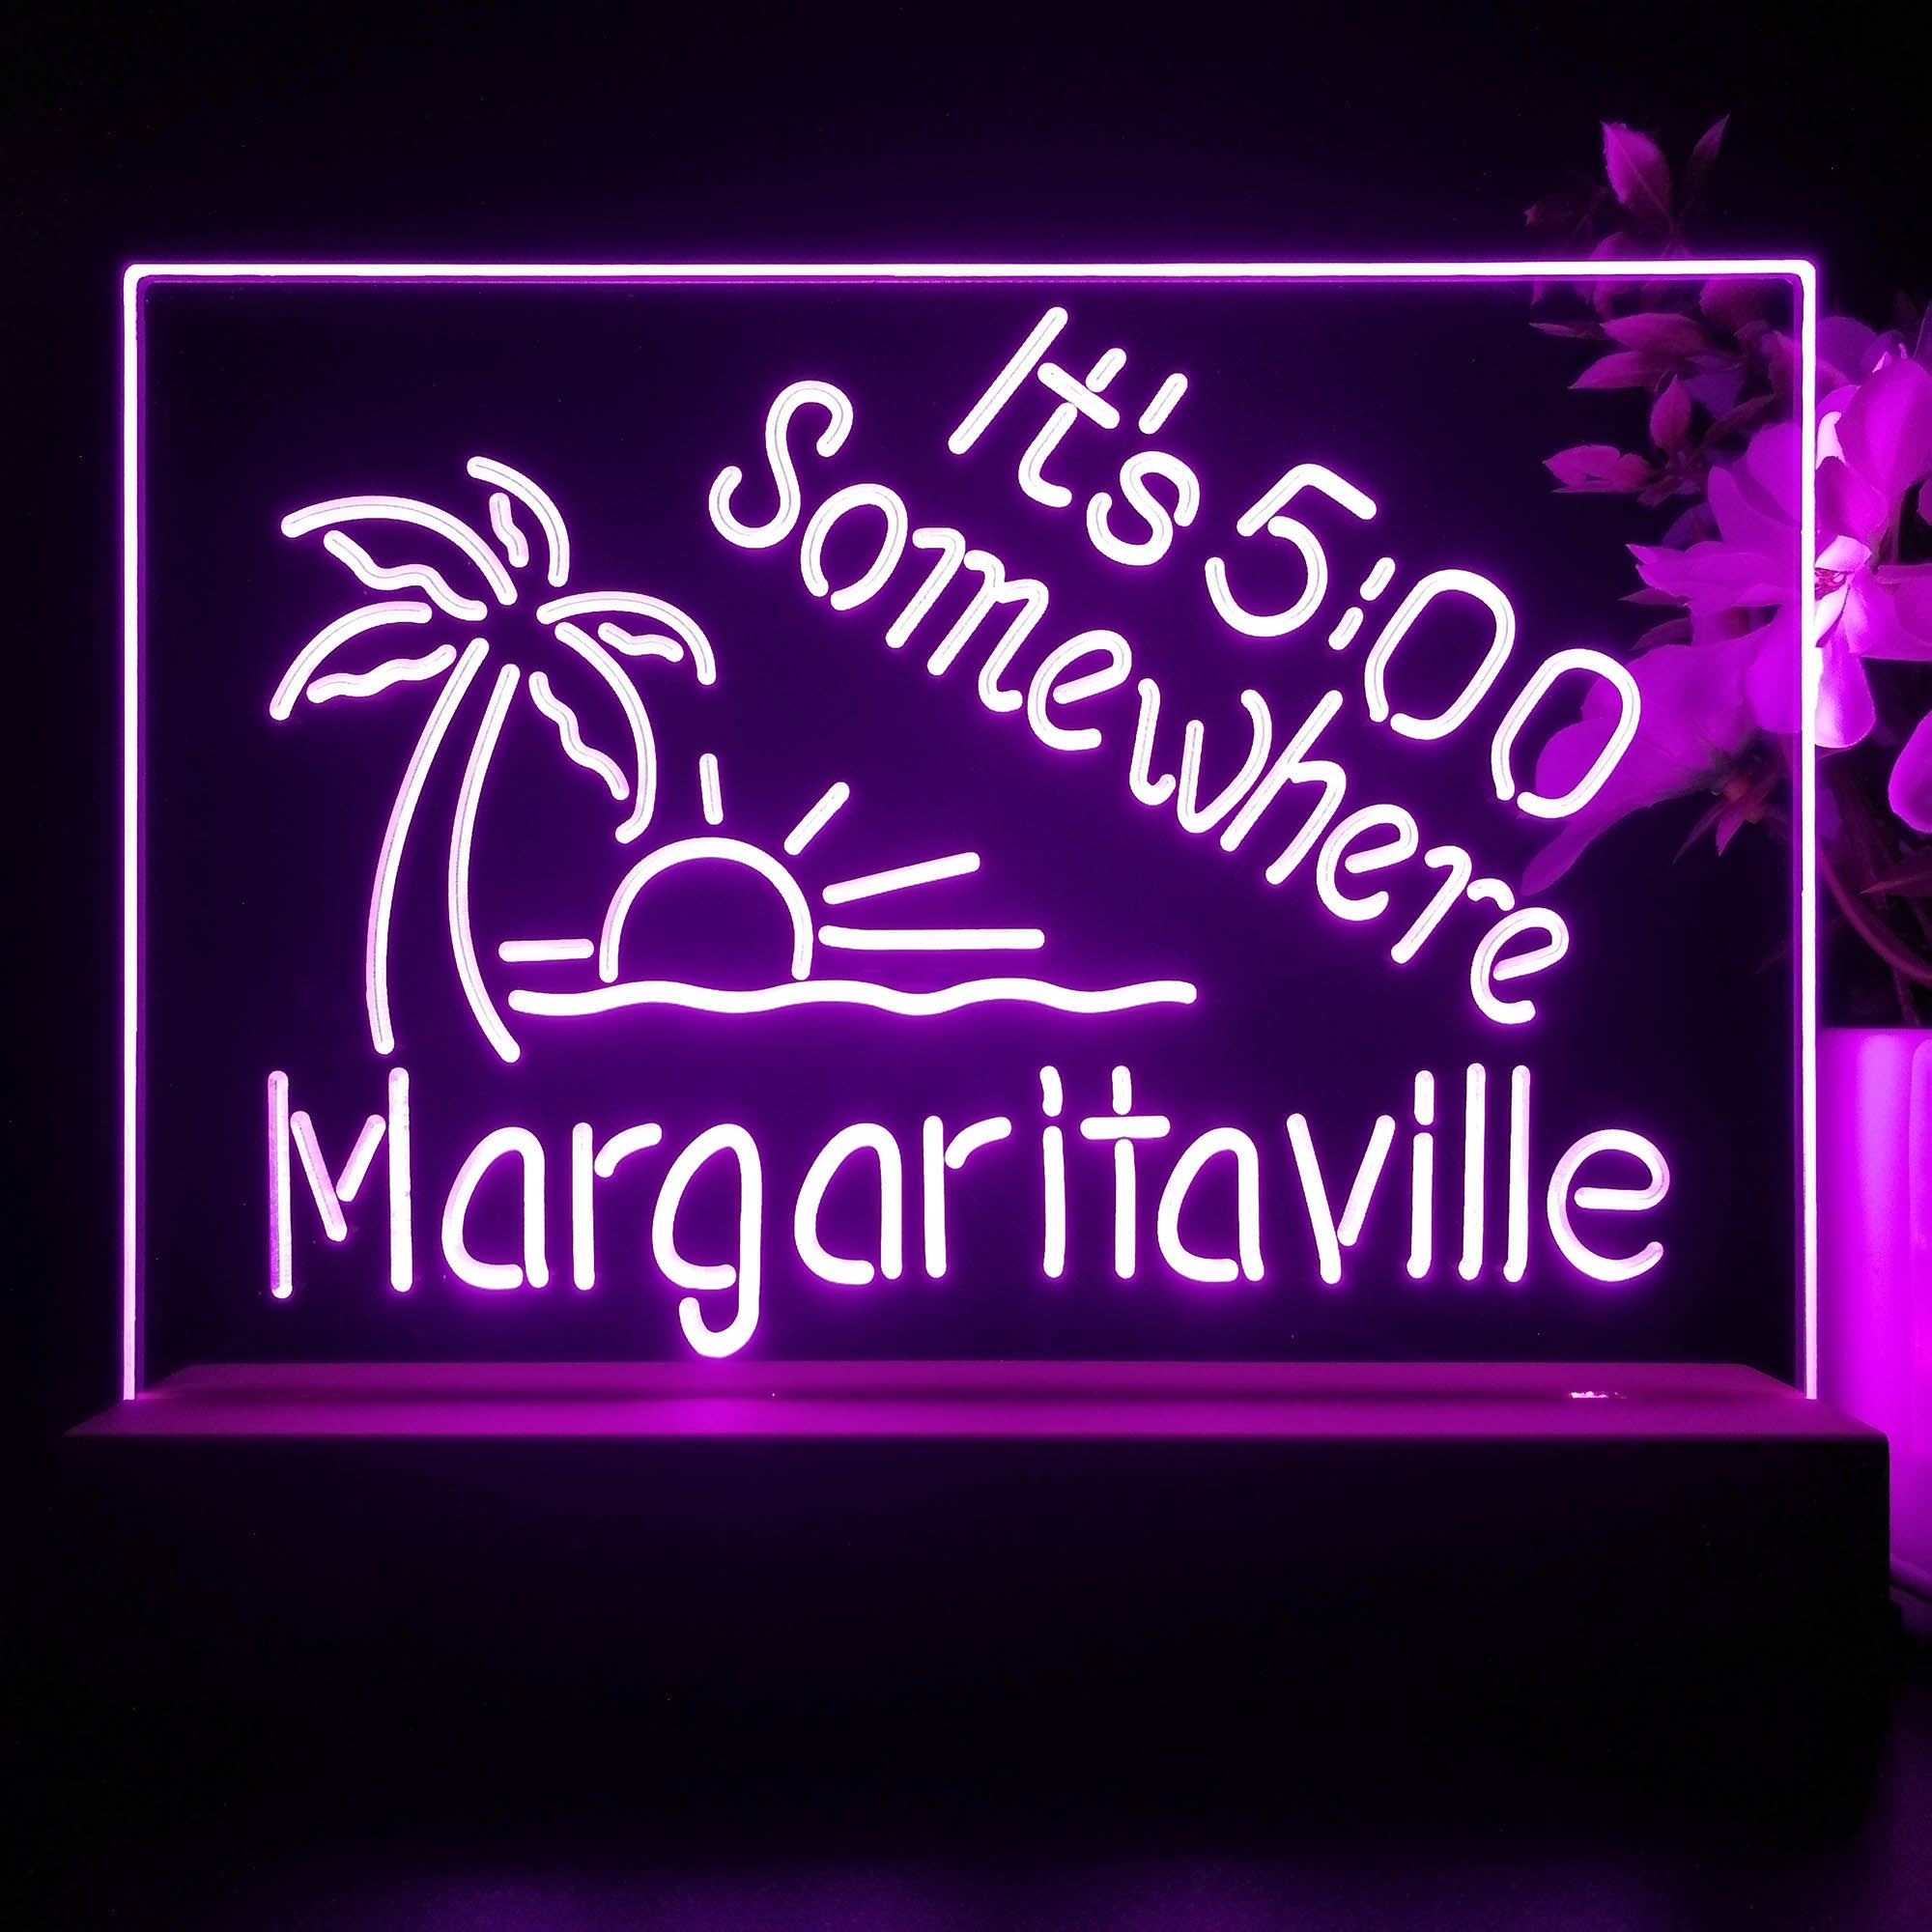 It's 500 Somewhere Margaritaville Neon Sign Pub Bar Lamp